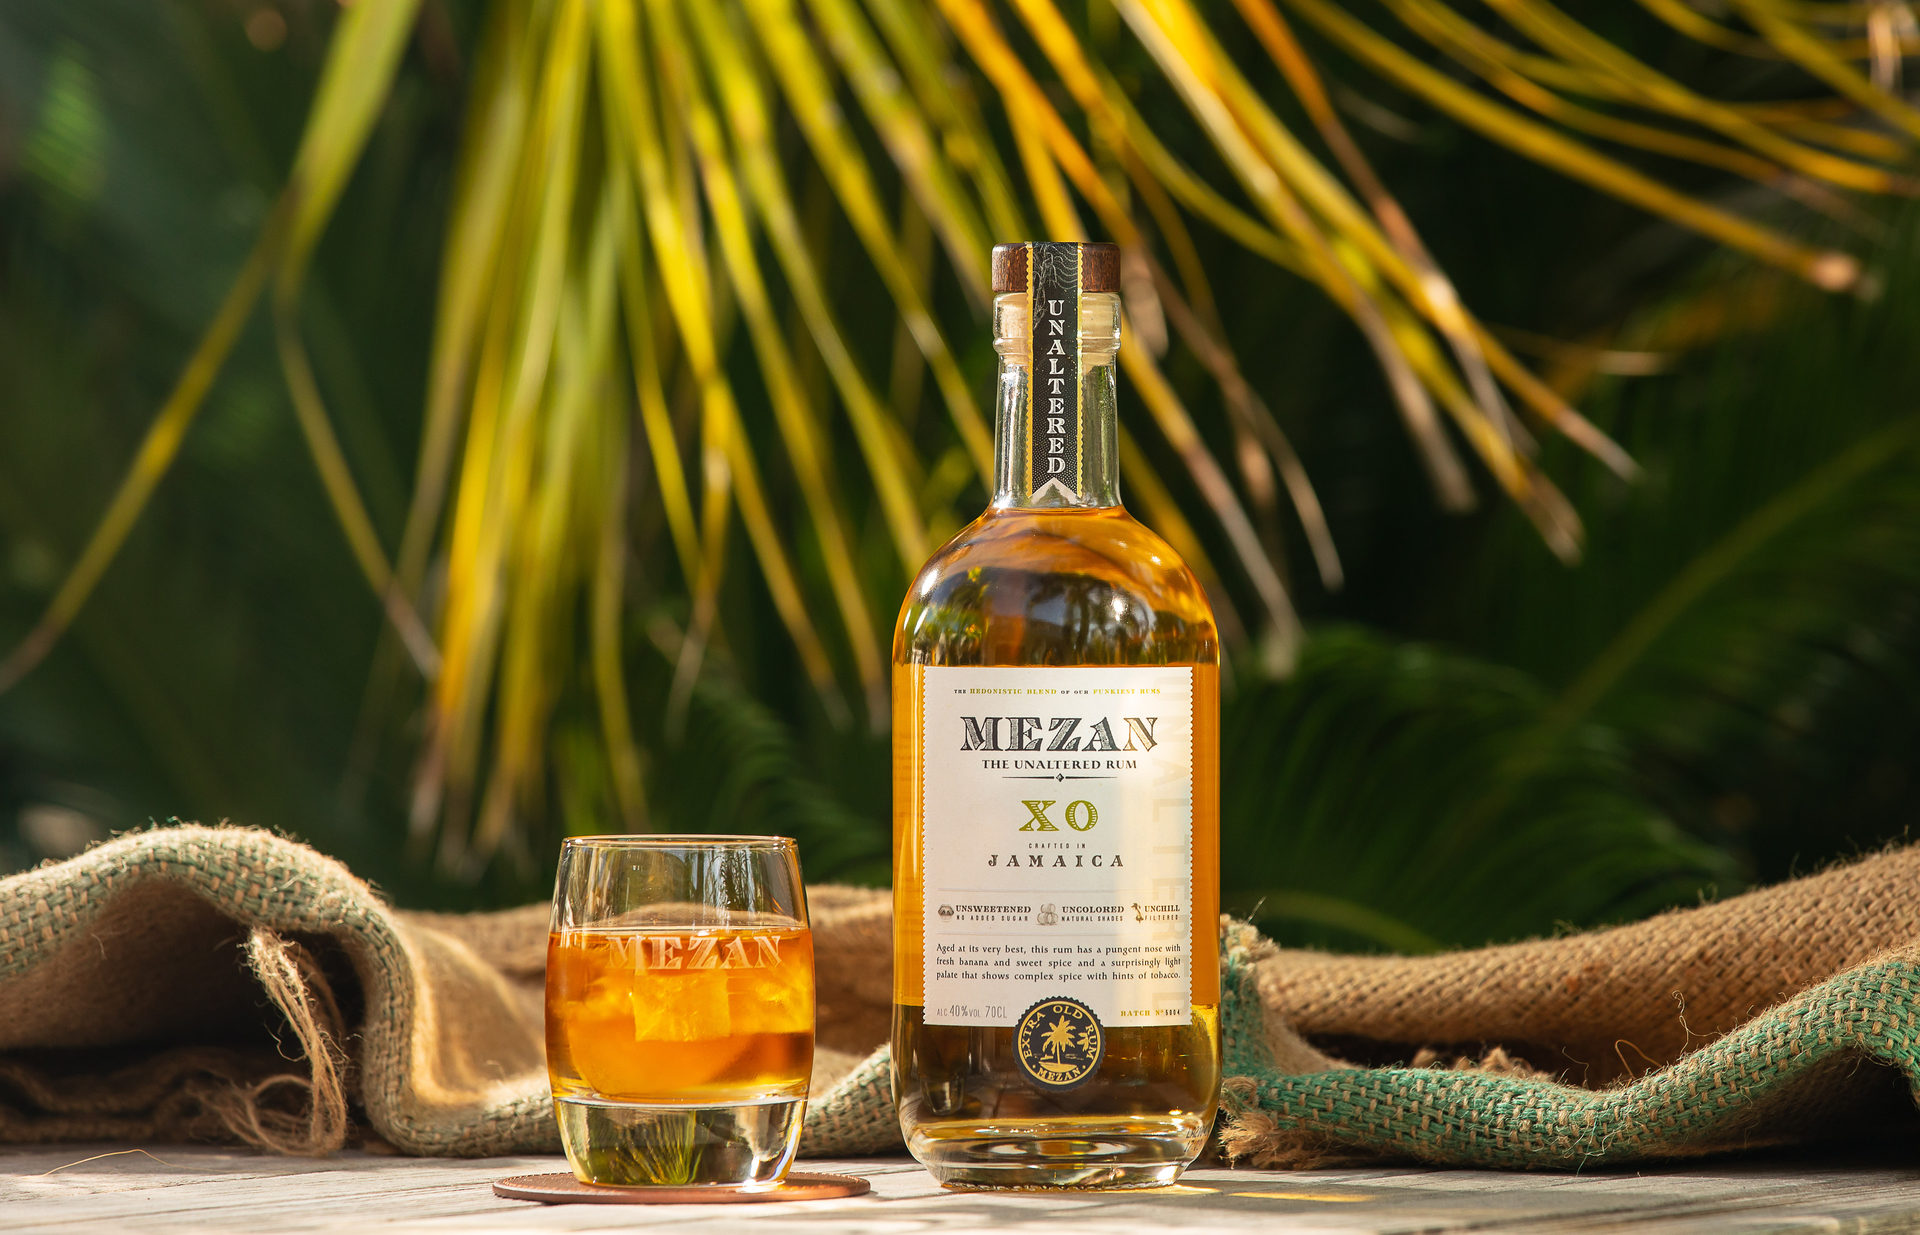 Mezan Rum | The Unaltered Rum of the Caribbean | Rum